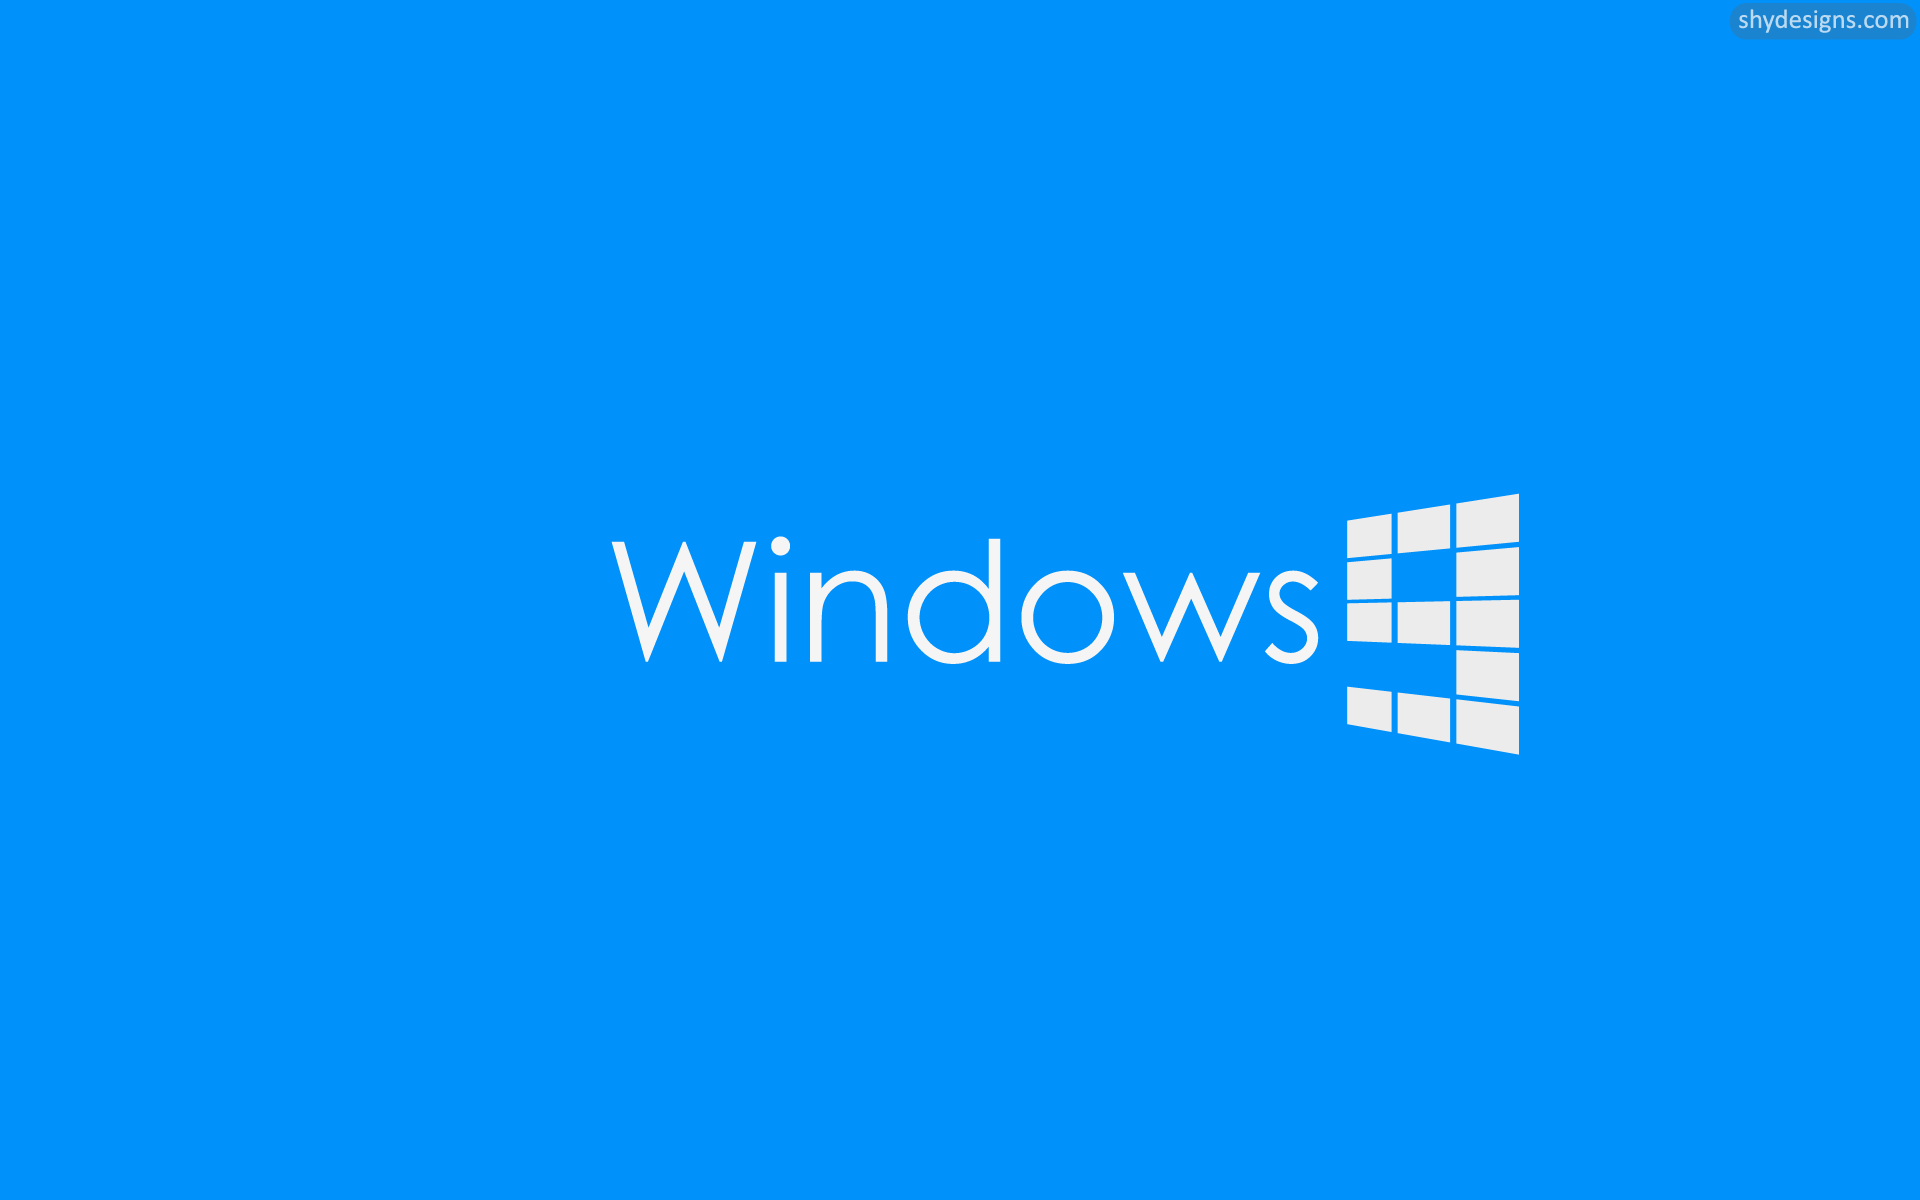 Windows Wallpaper Skyblue